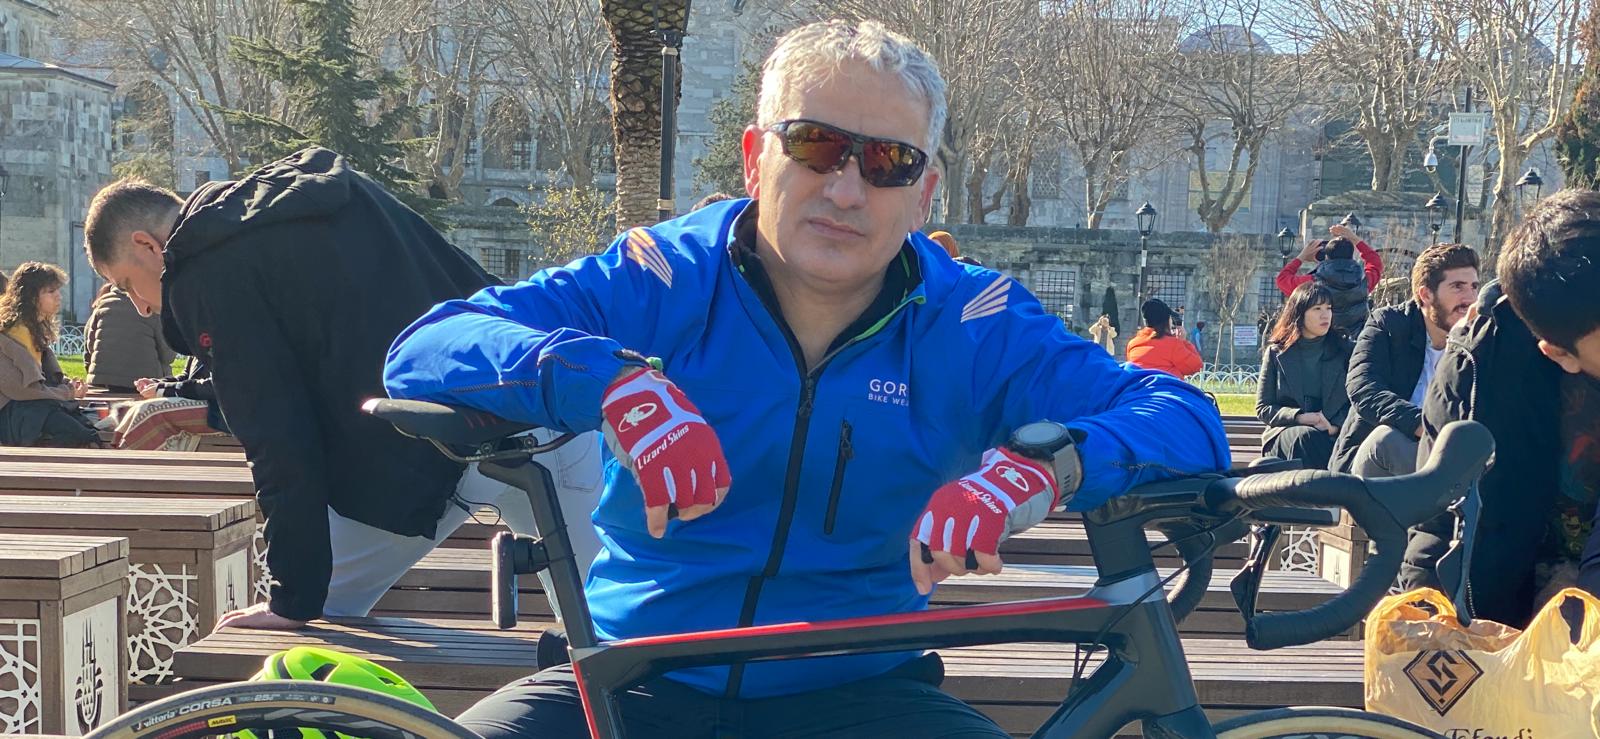 Mardin Samsa Bisiklet, Antalya'da şampiyon...